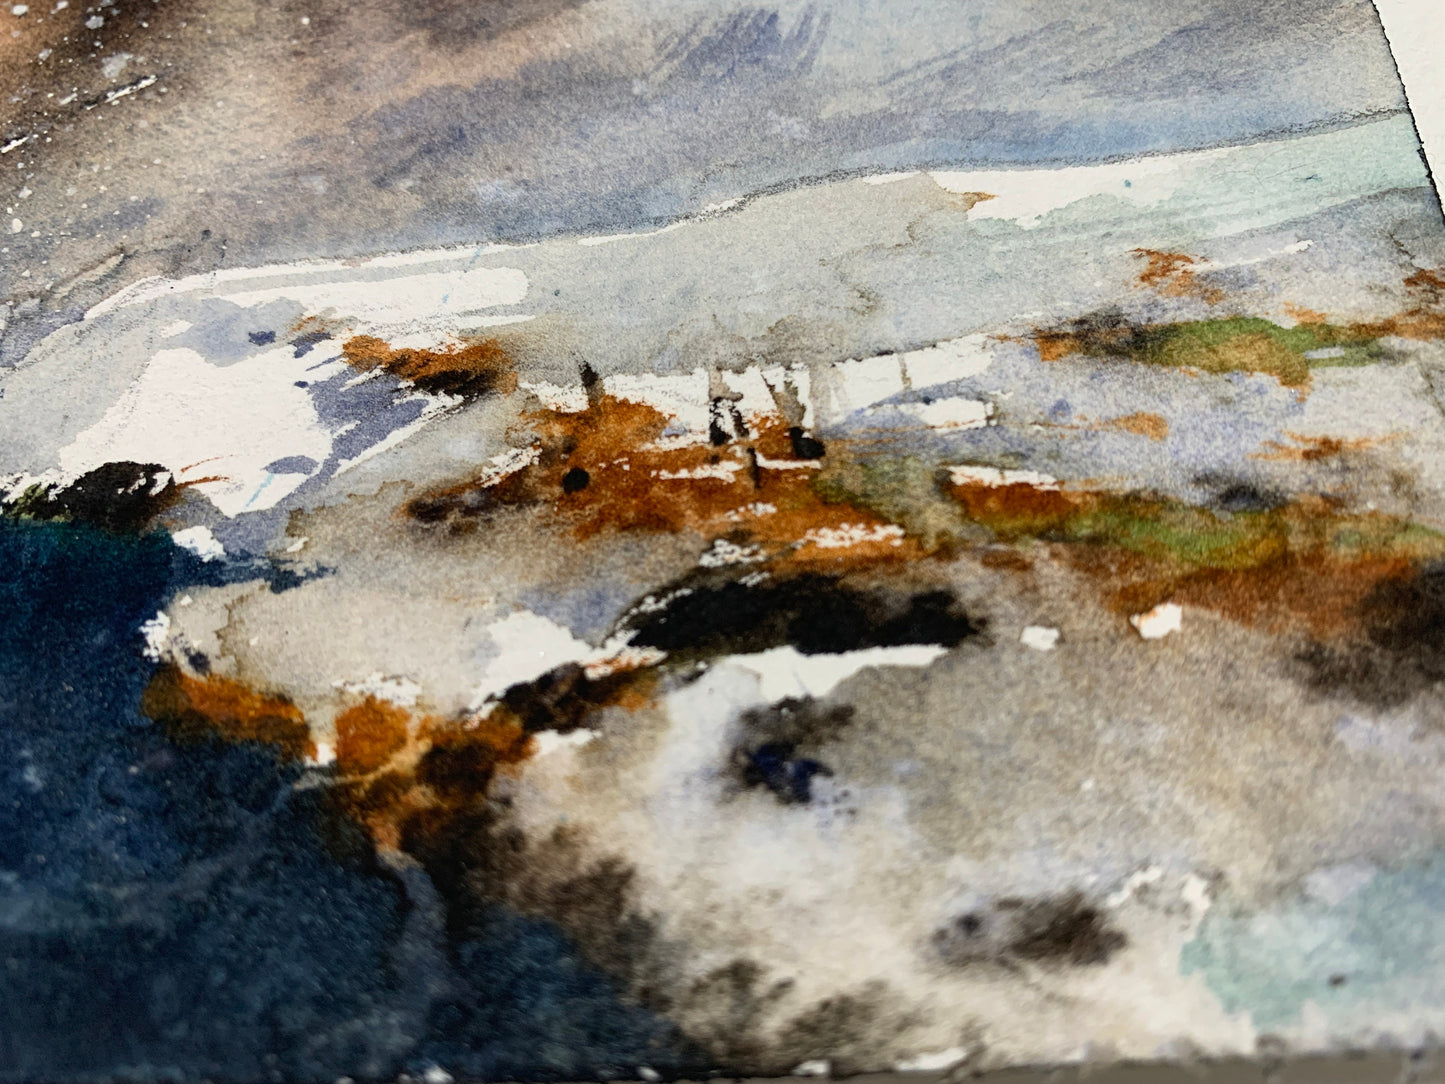 Waterfall Watercolor Original Painting, Nature Art, Icelandic Landscape Artwork, Nordic Wall Decor, Gift For Traveler